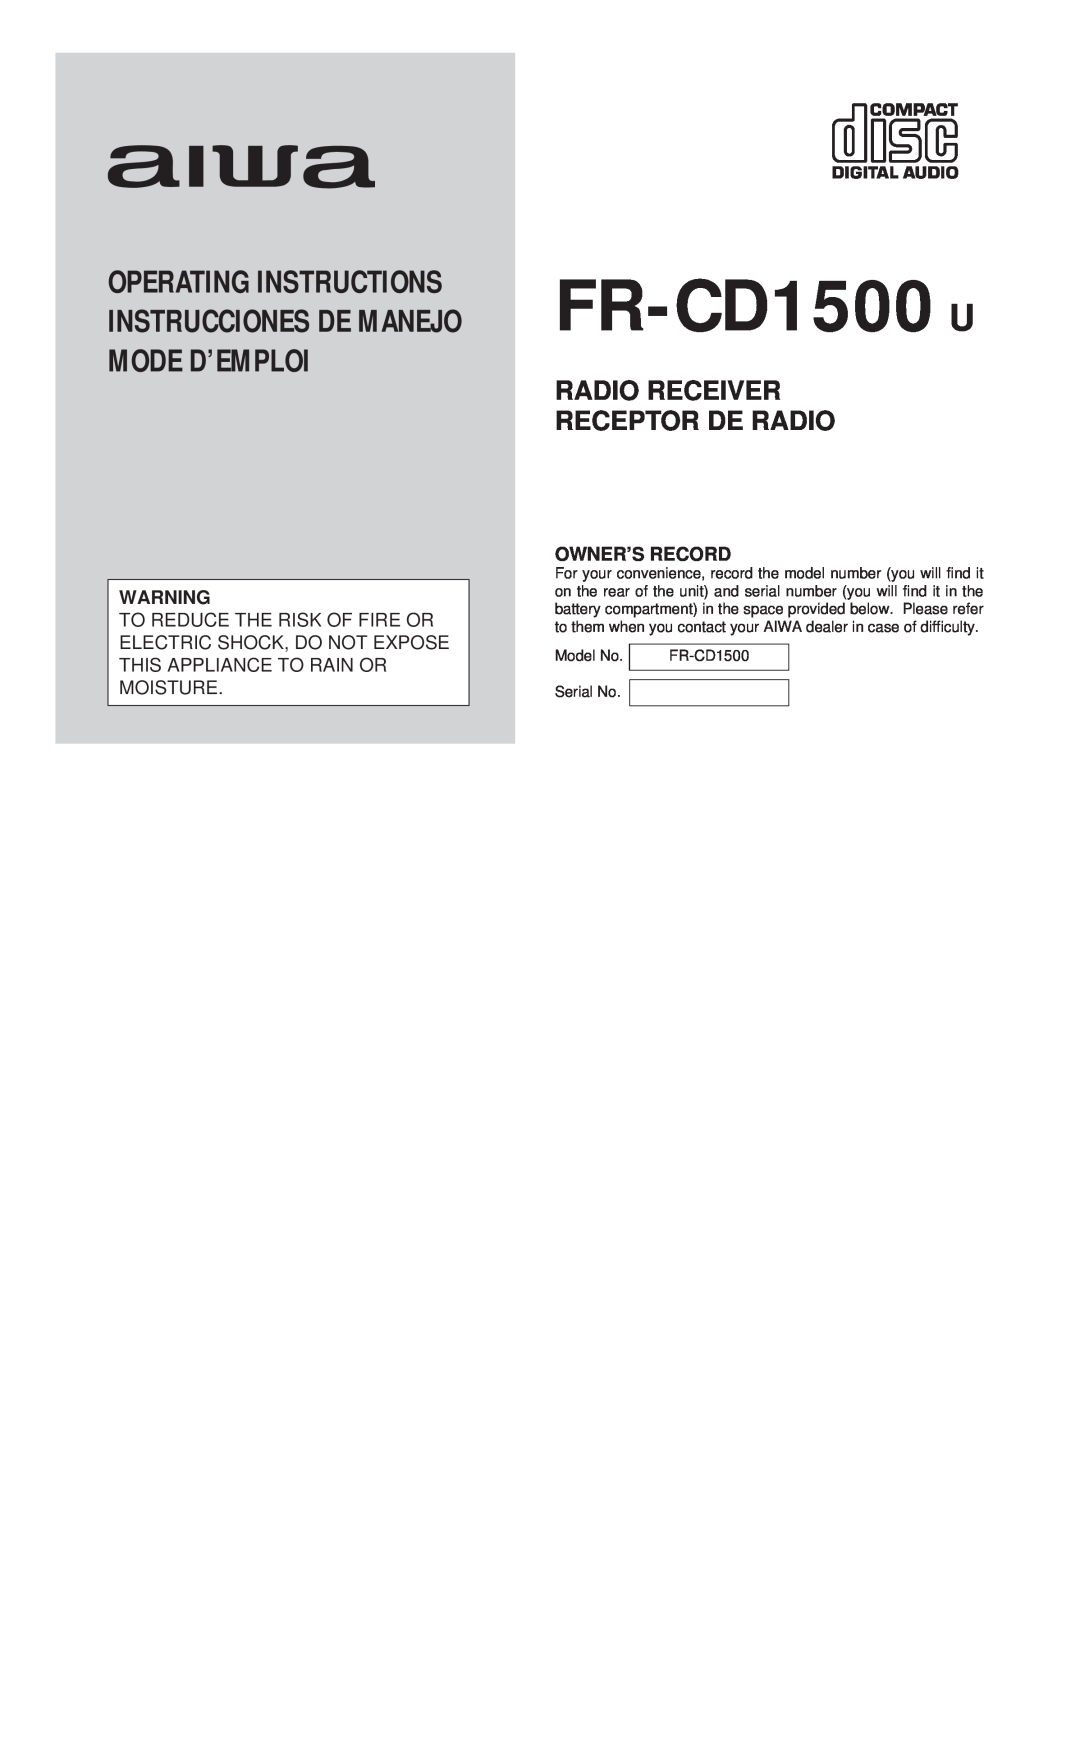 Aiwa manual Radio Receiver Receptor De Radio, Owner’S Record, FR-CD1500 U 